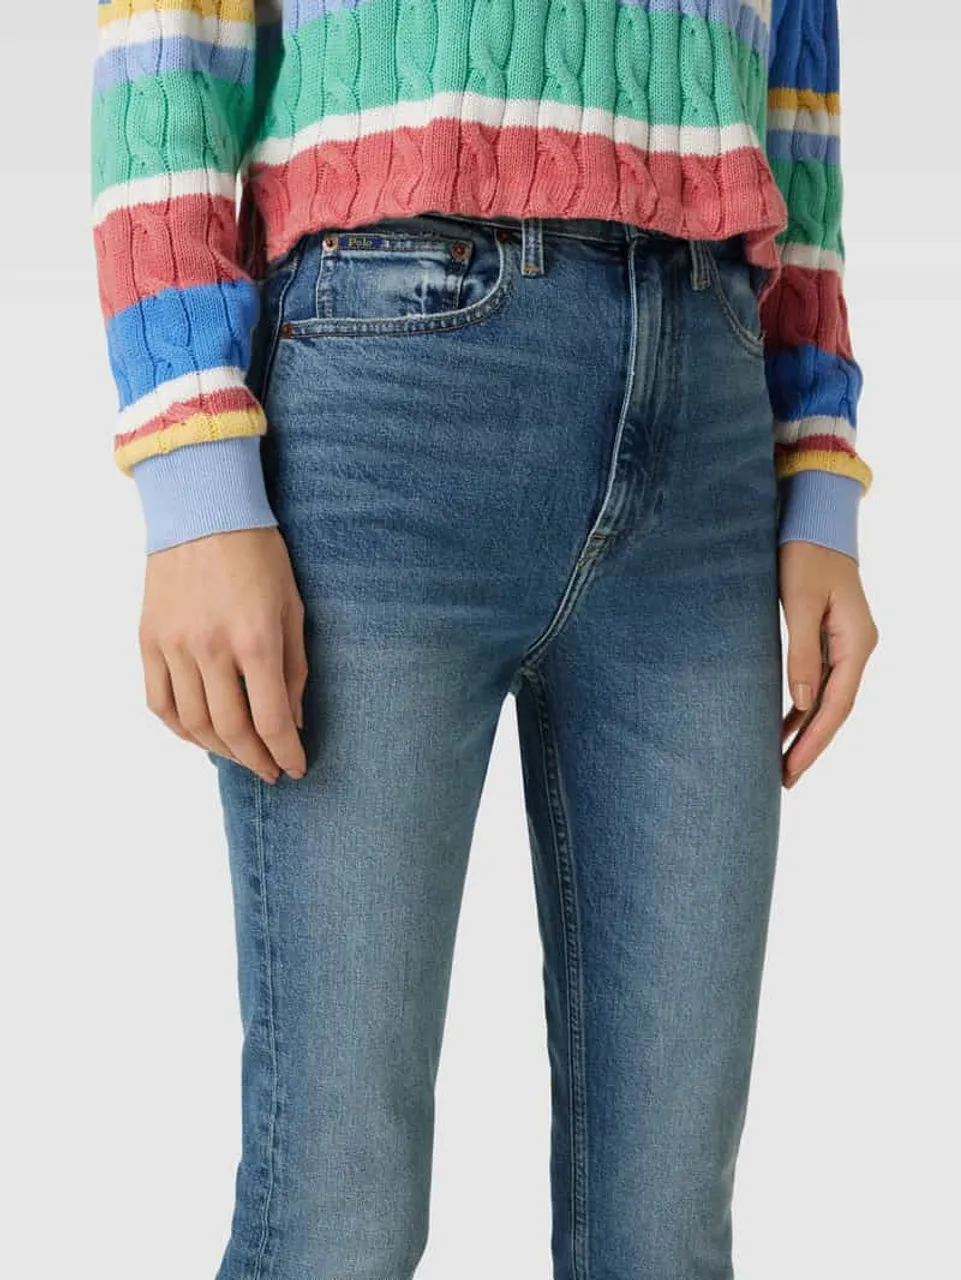 Polo Ralph Lauren High Waist Slim Fit Jeans im 5-Pocket-Design in Jeansblau